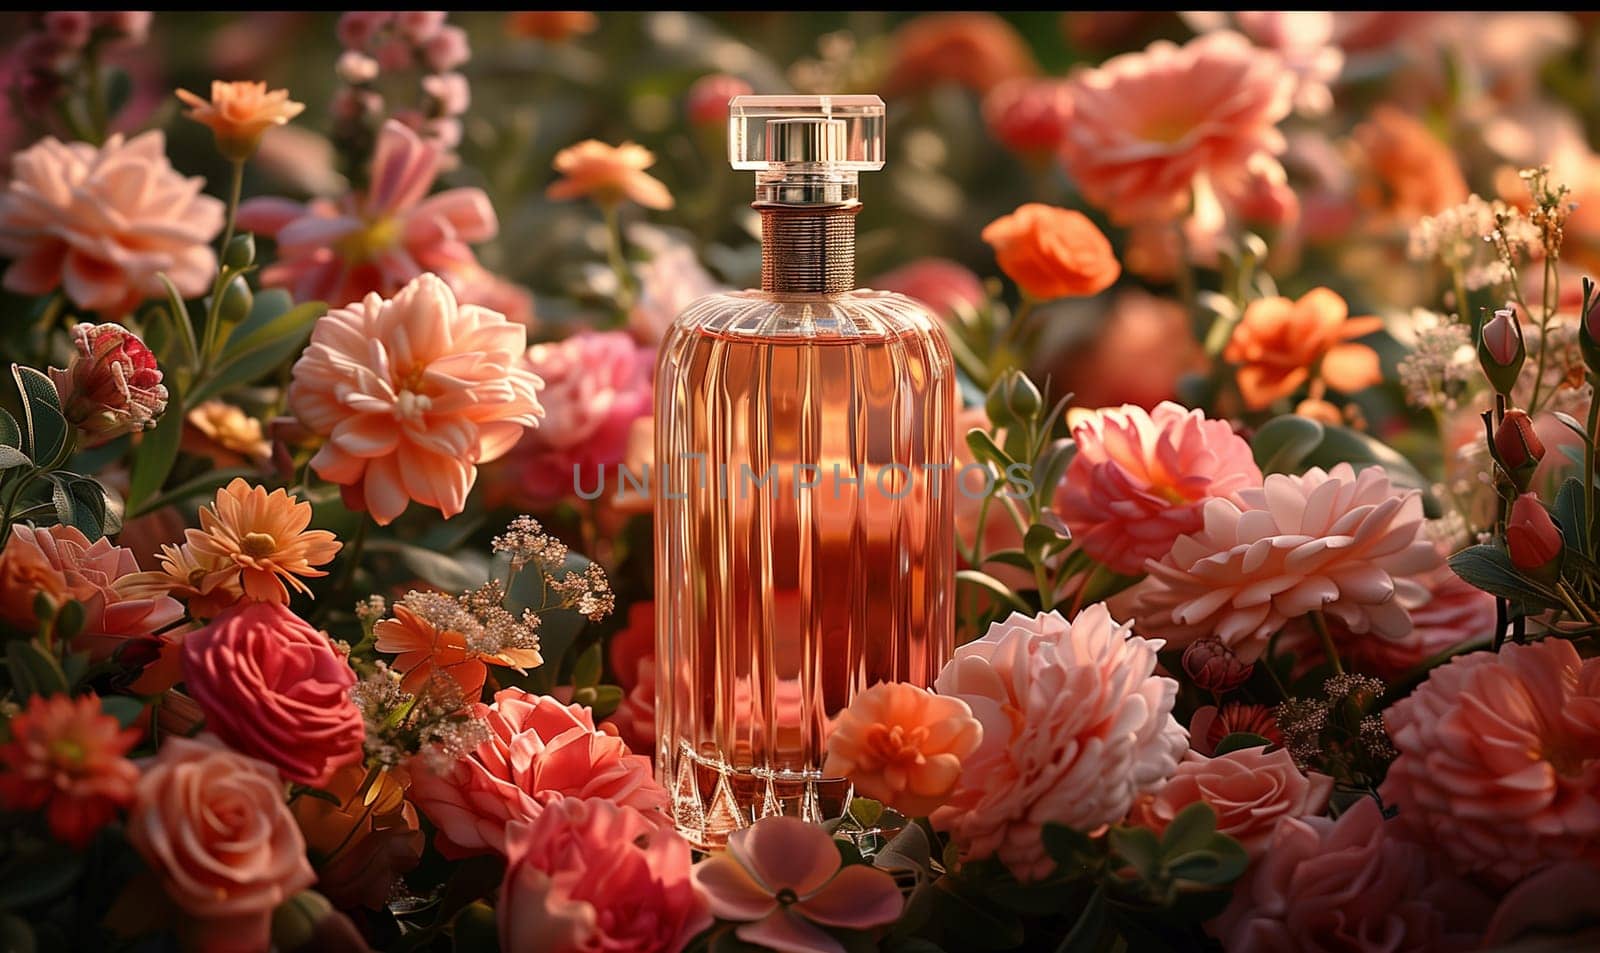 Elegant perfume bottle among flowers in retro style. by Fischeron